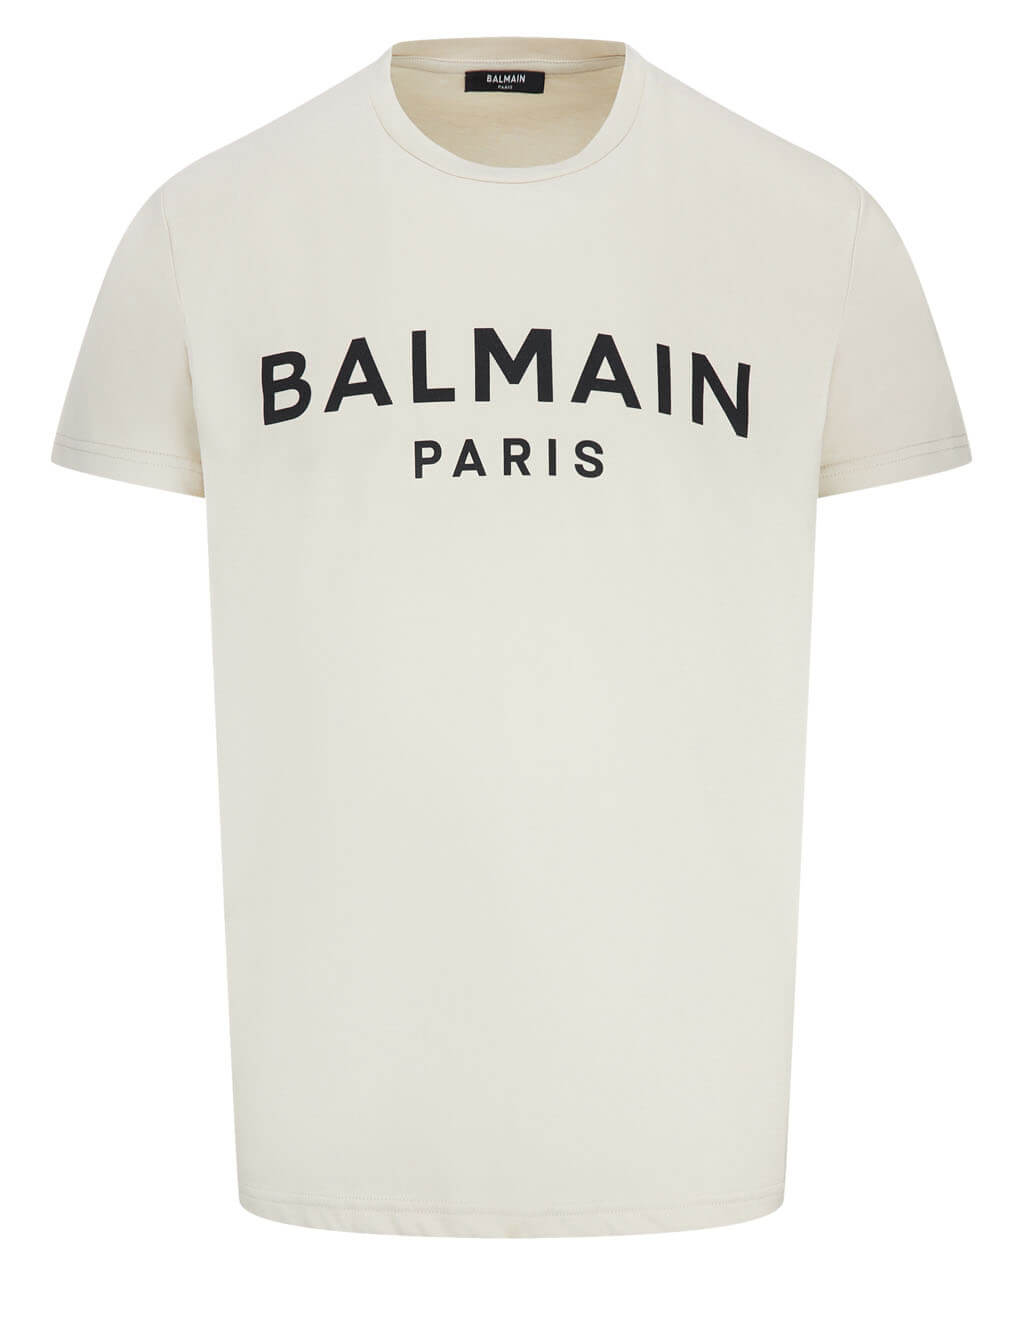 Balmain Paris Print T-Shirt | Luxury fashion men & women